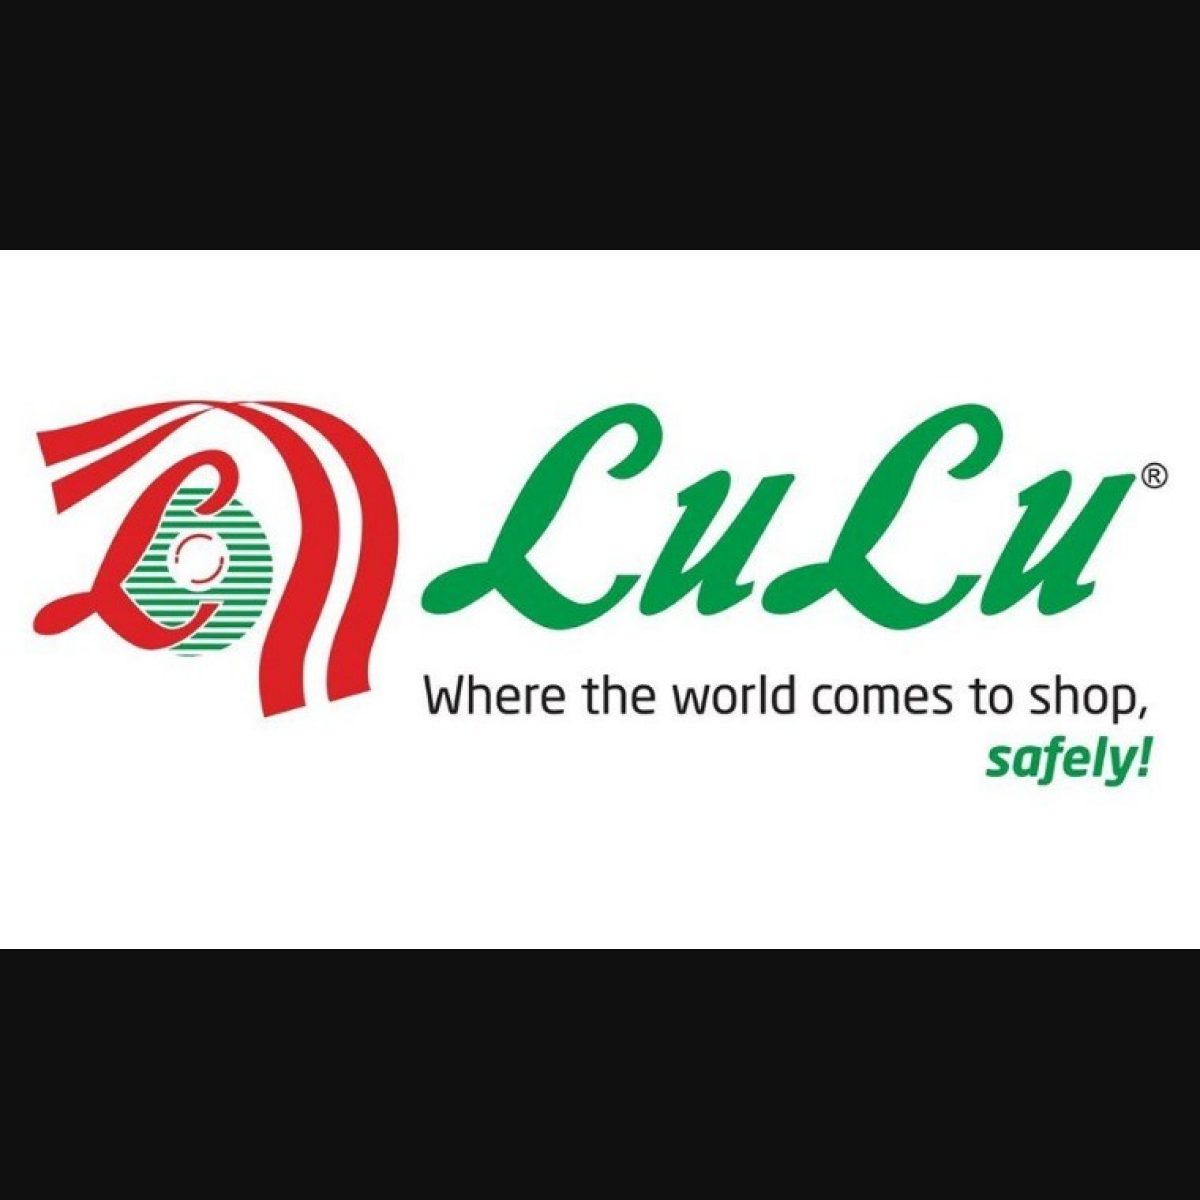 UAE-based LuLu could become associate sponsor of IPL: Reports - The Week